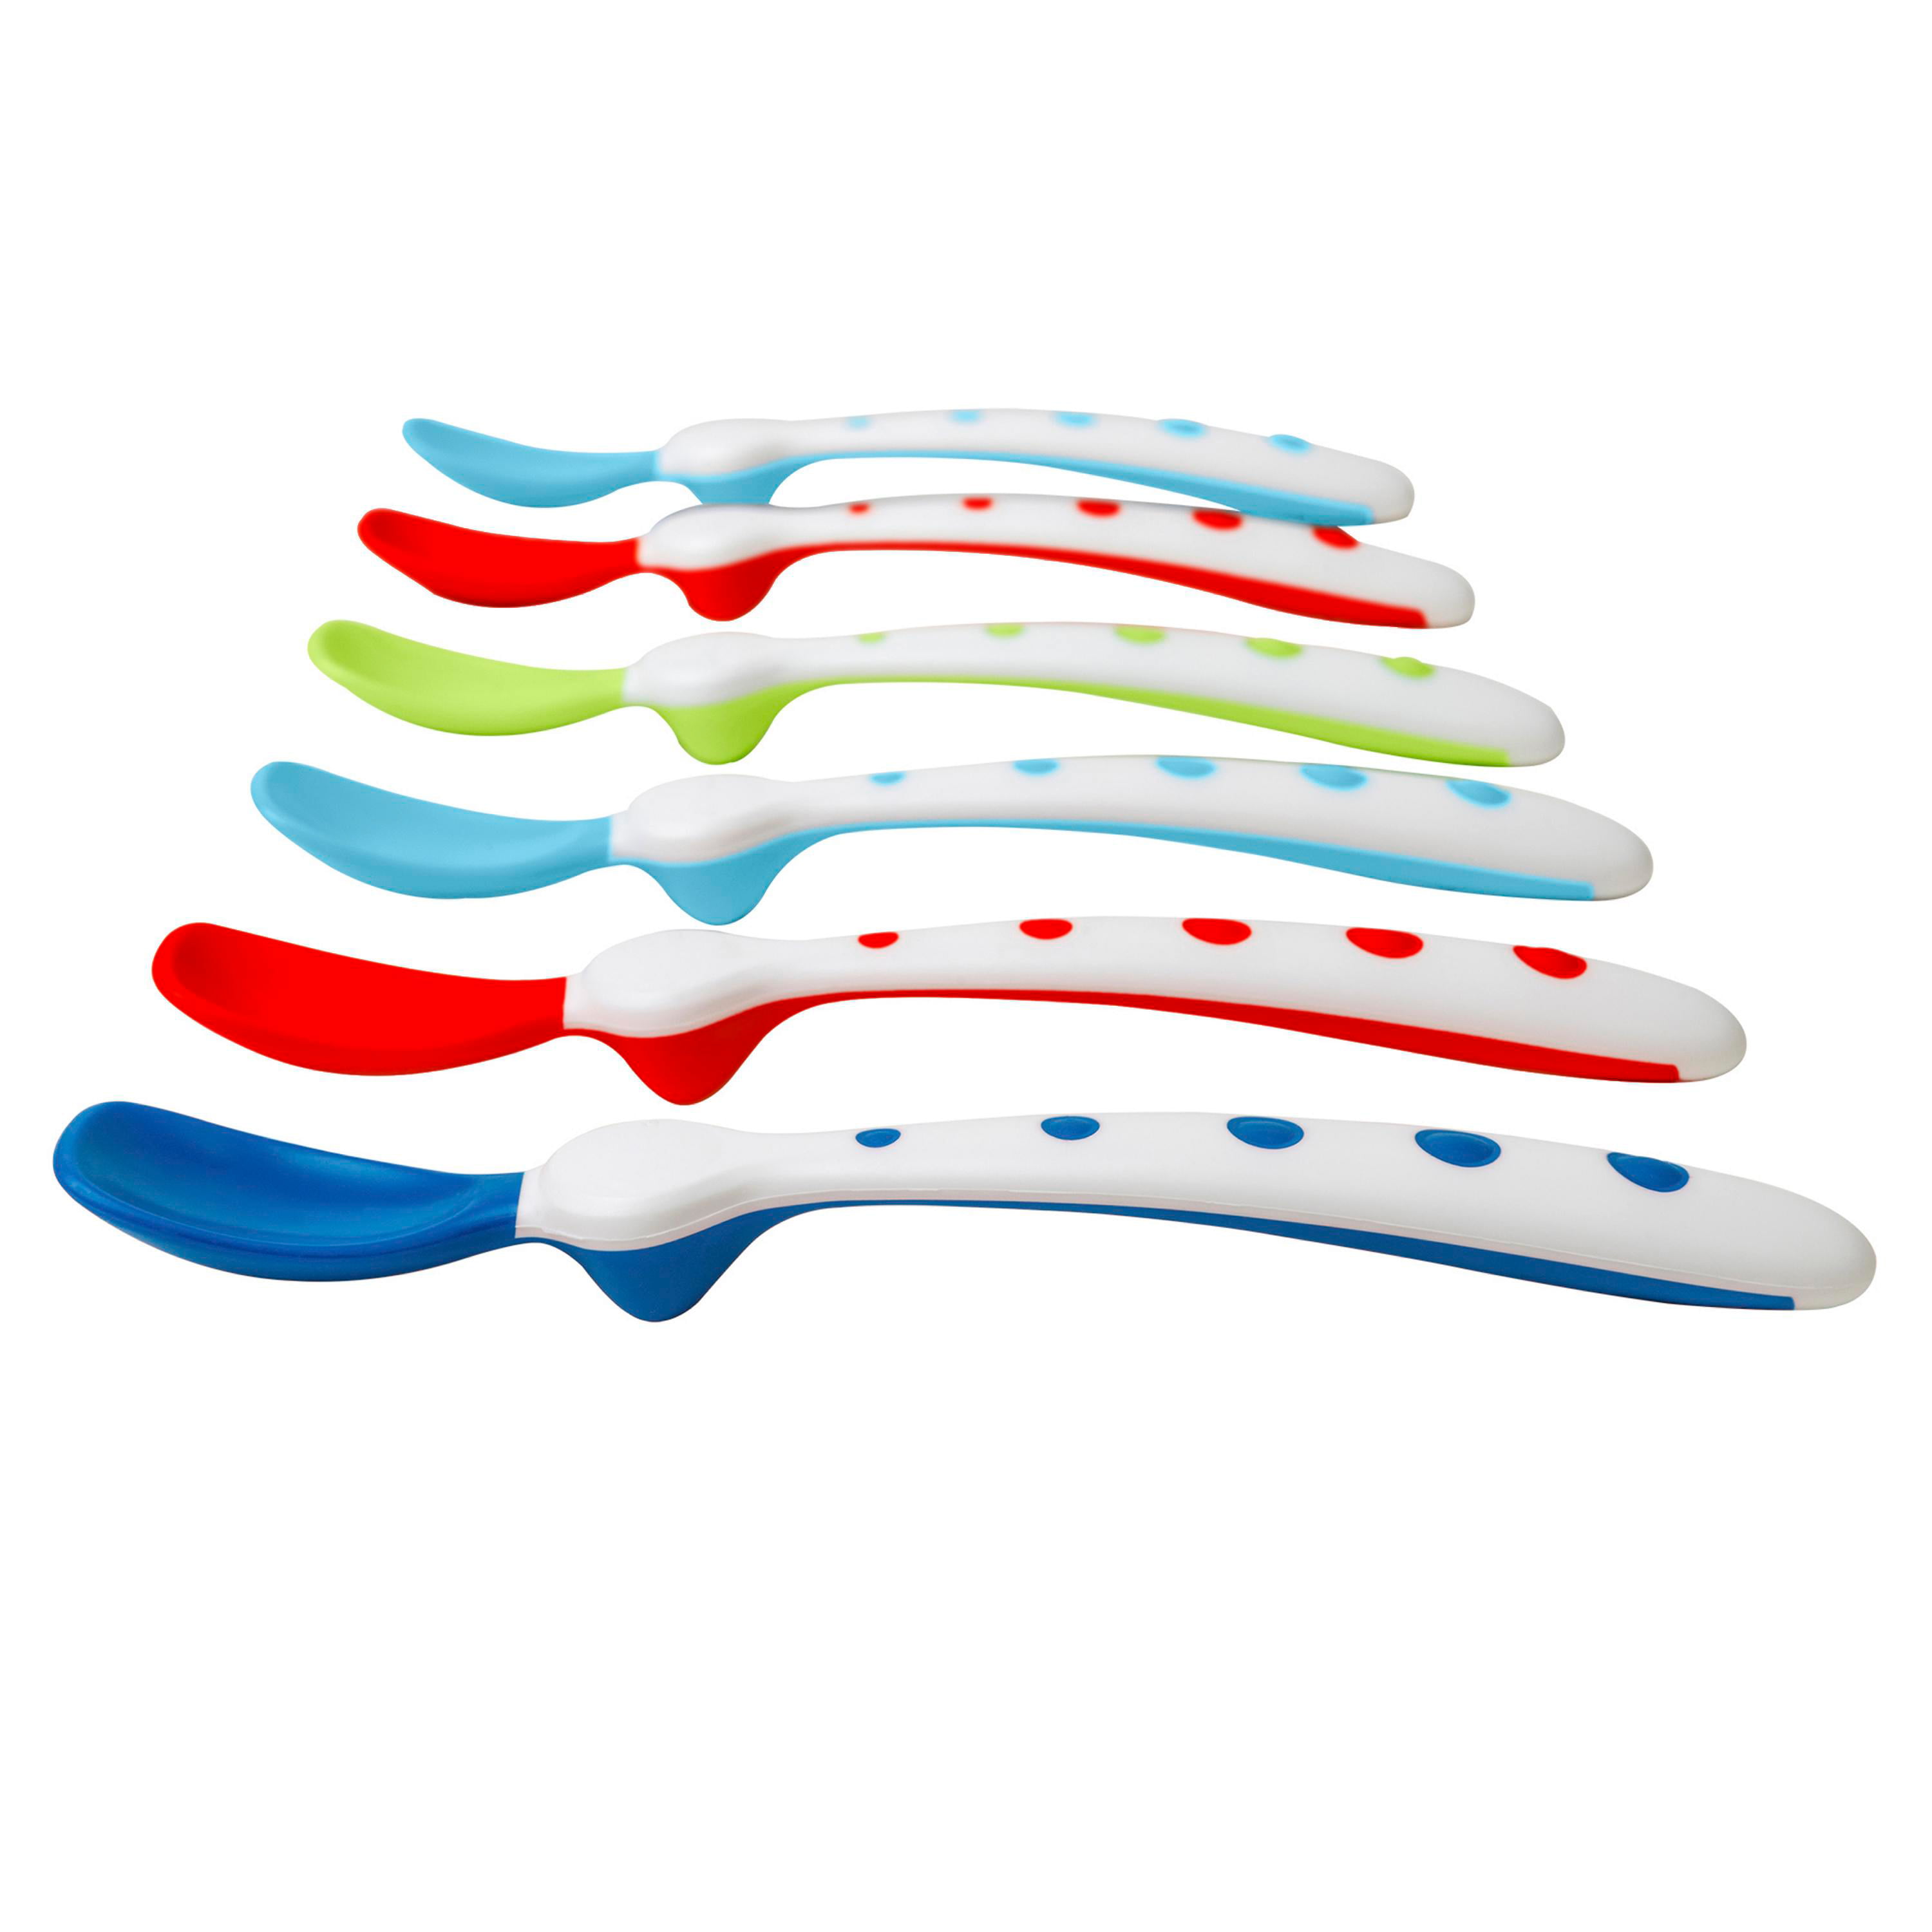 NUK First Essentials Soft-Bite Infant Spoons 4 ea, Shop